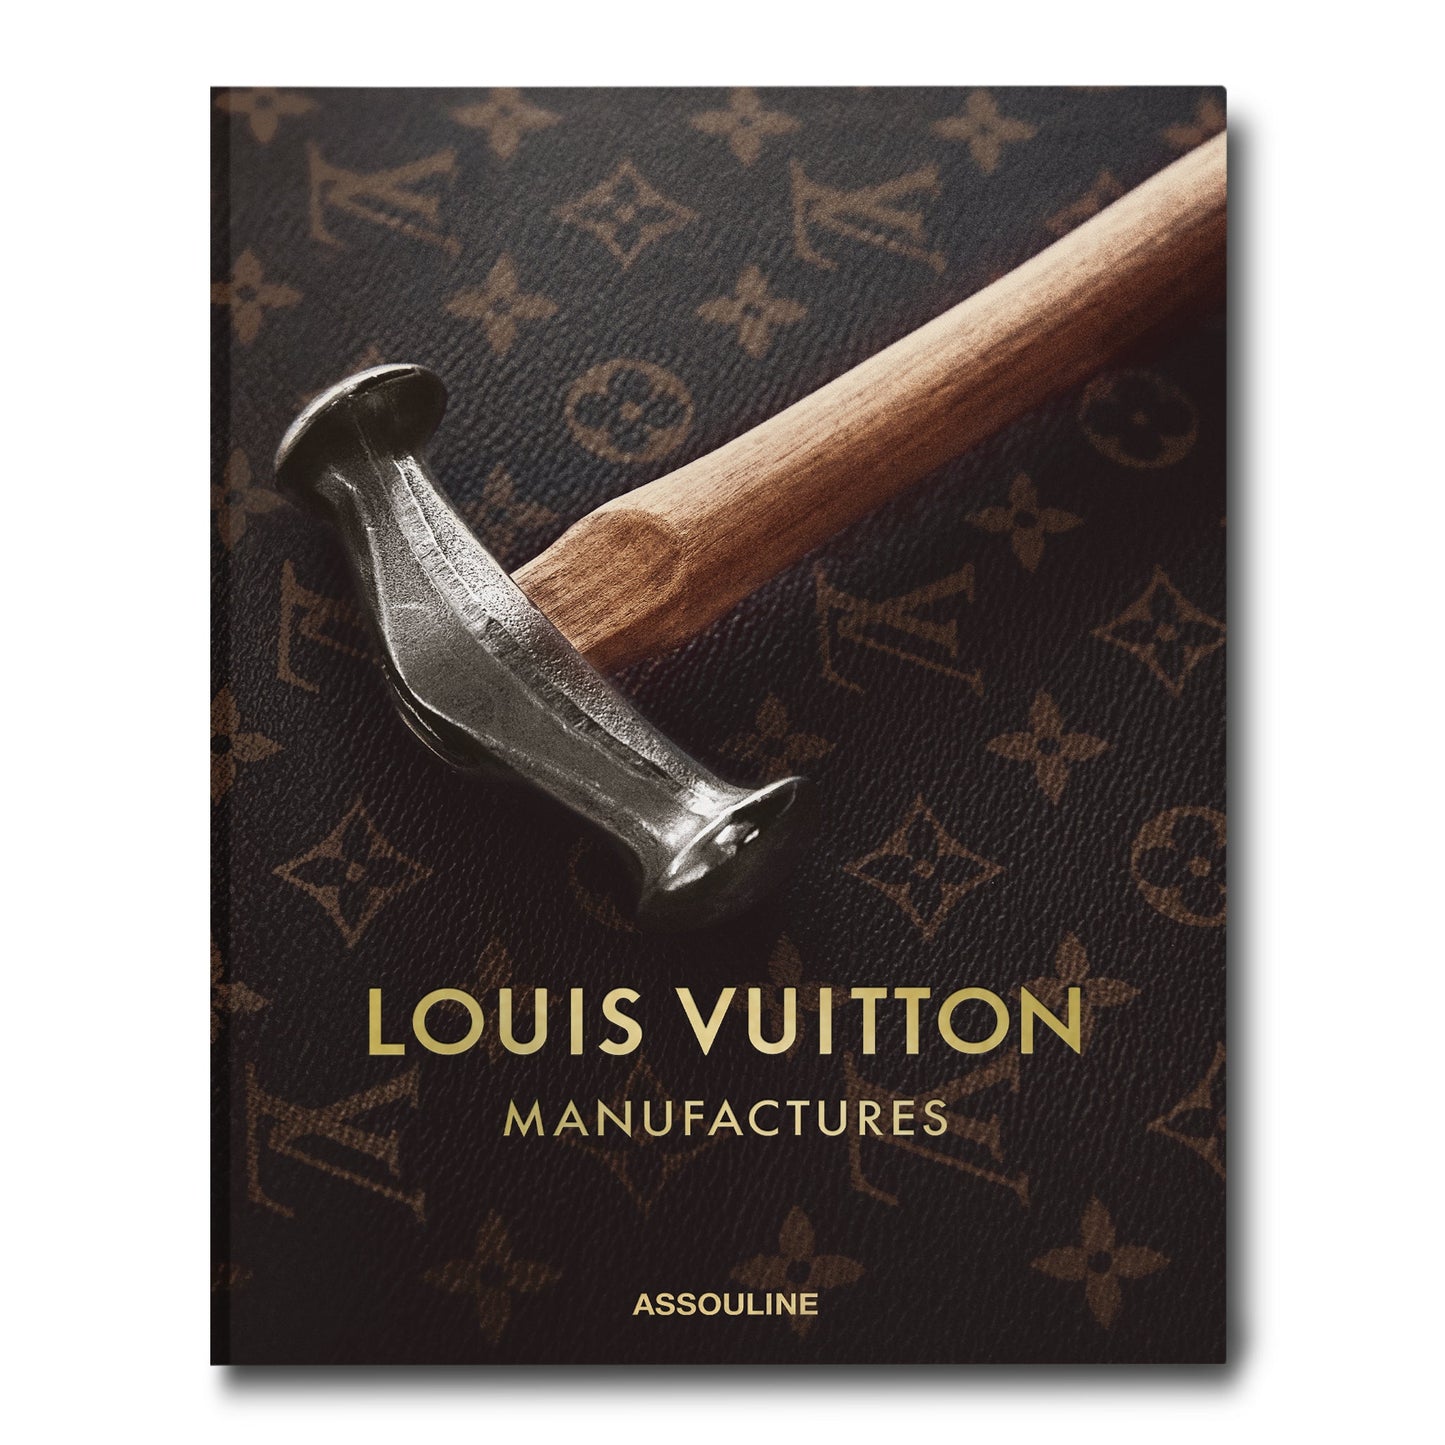 LOUIS VUITTON MANUFACTURES BOOK - $95